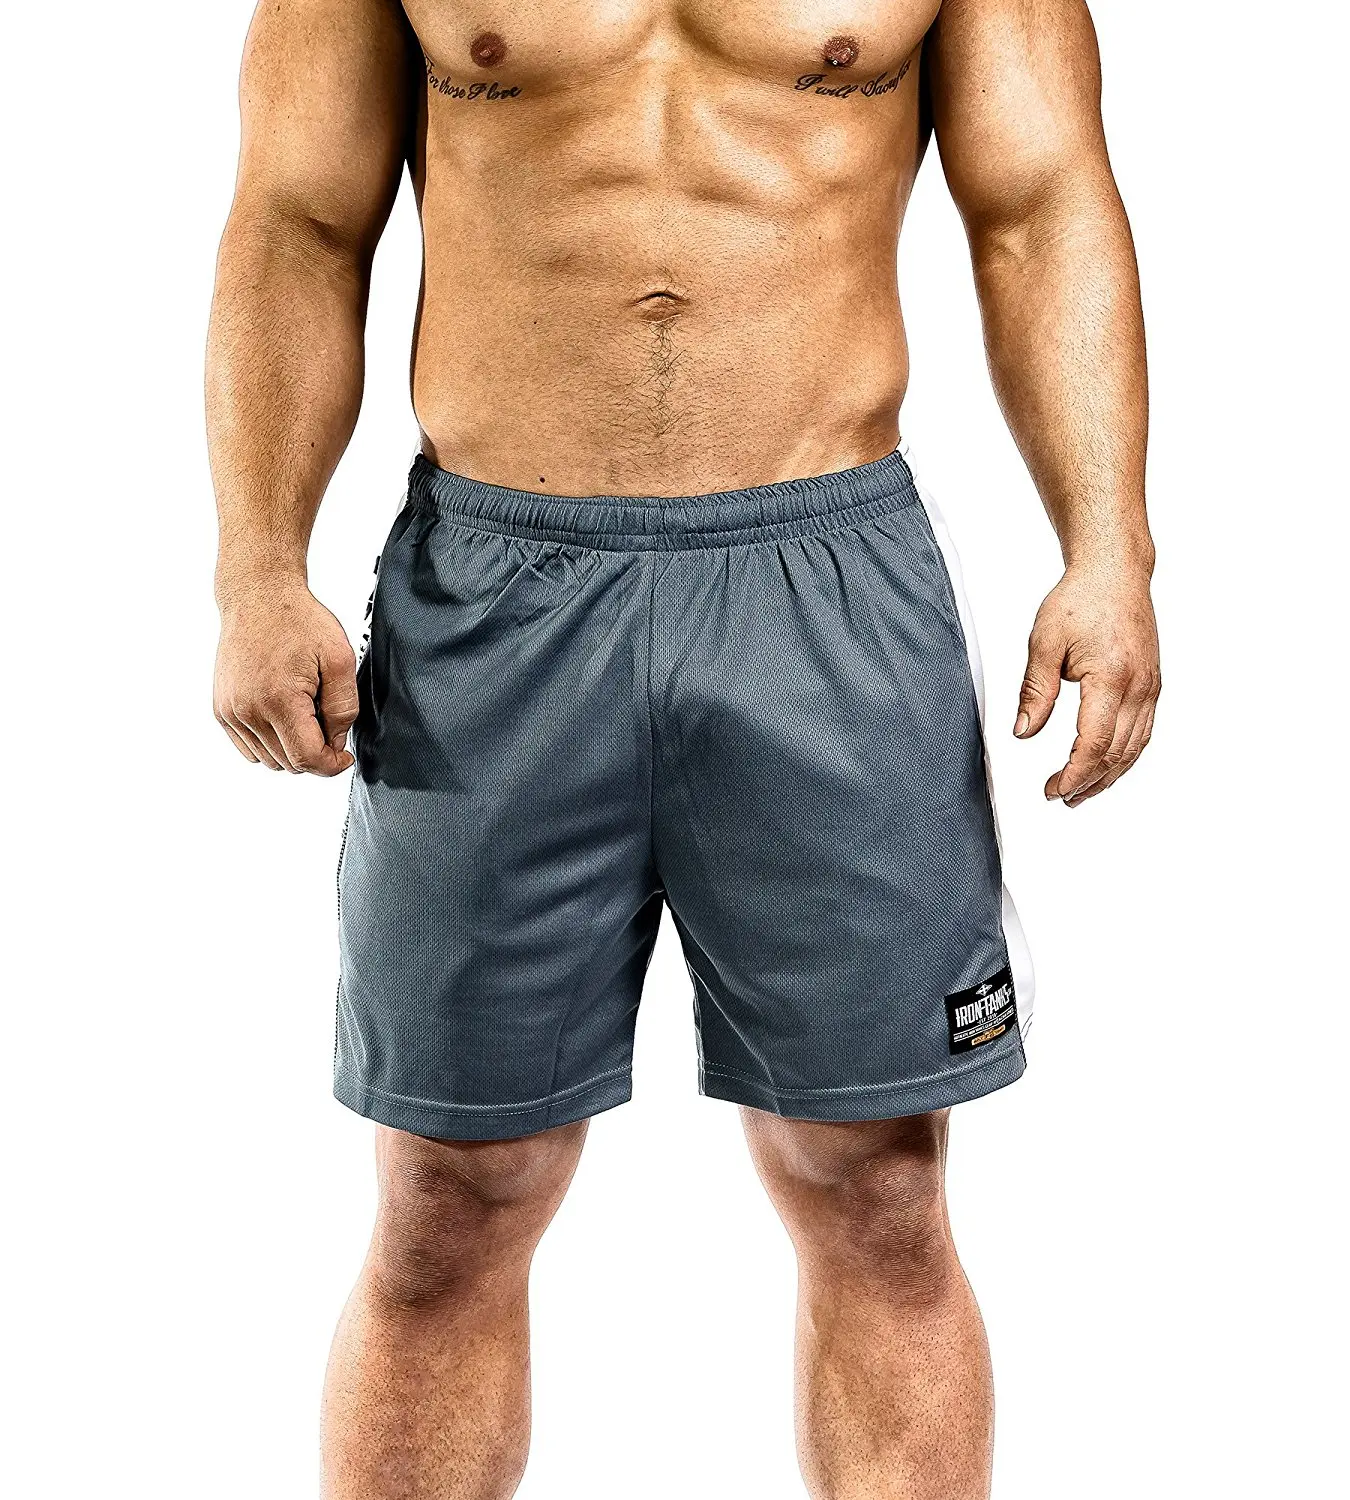 Buy Iron Tanks Iron Mesh VQ Grey - Mens Gym Bodybuilding Fitness ...